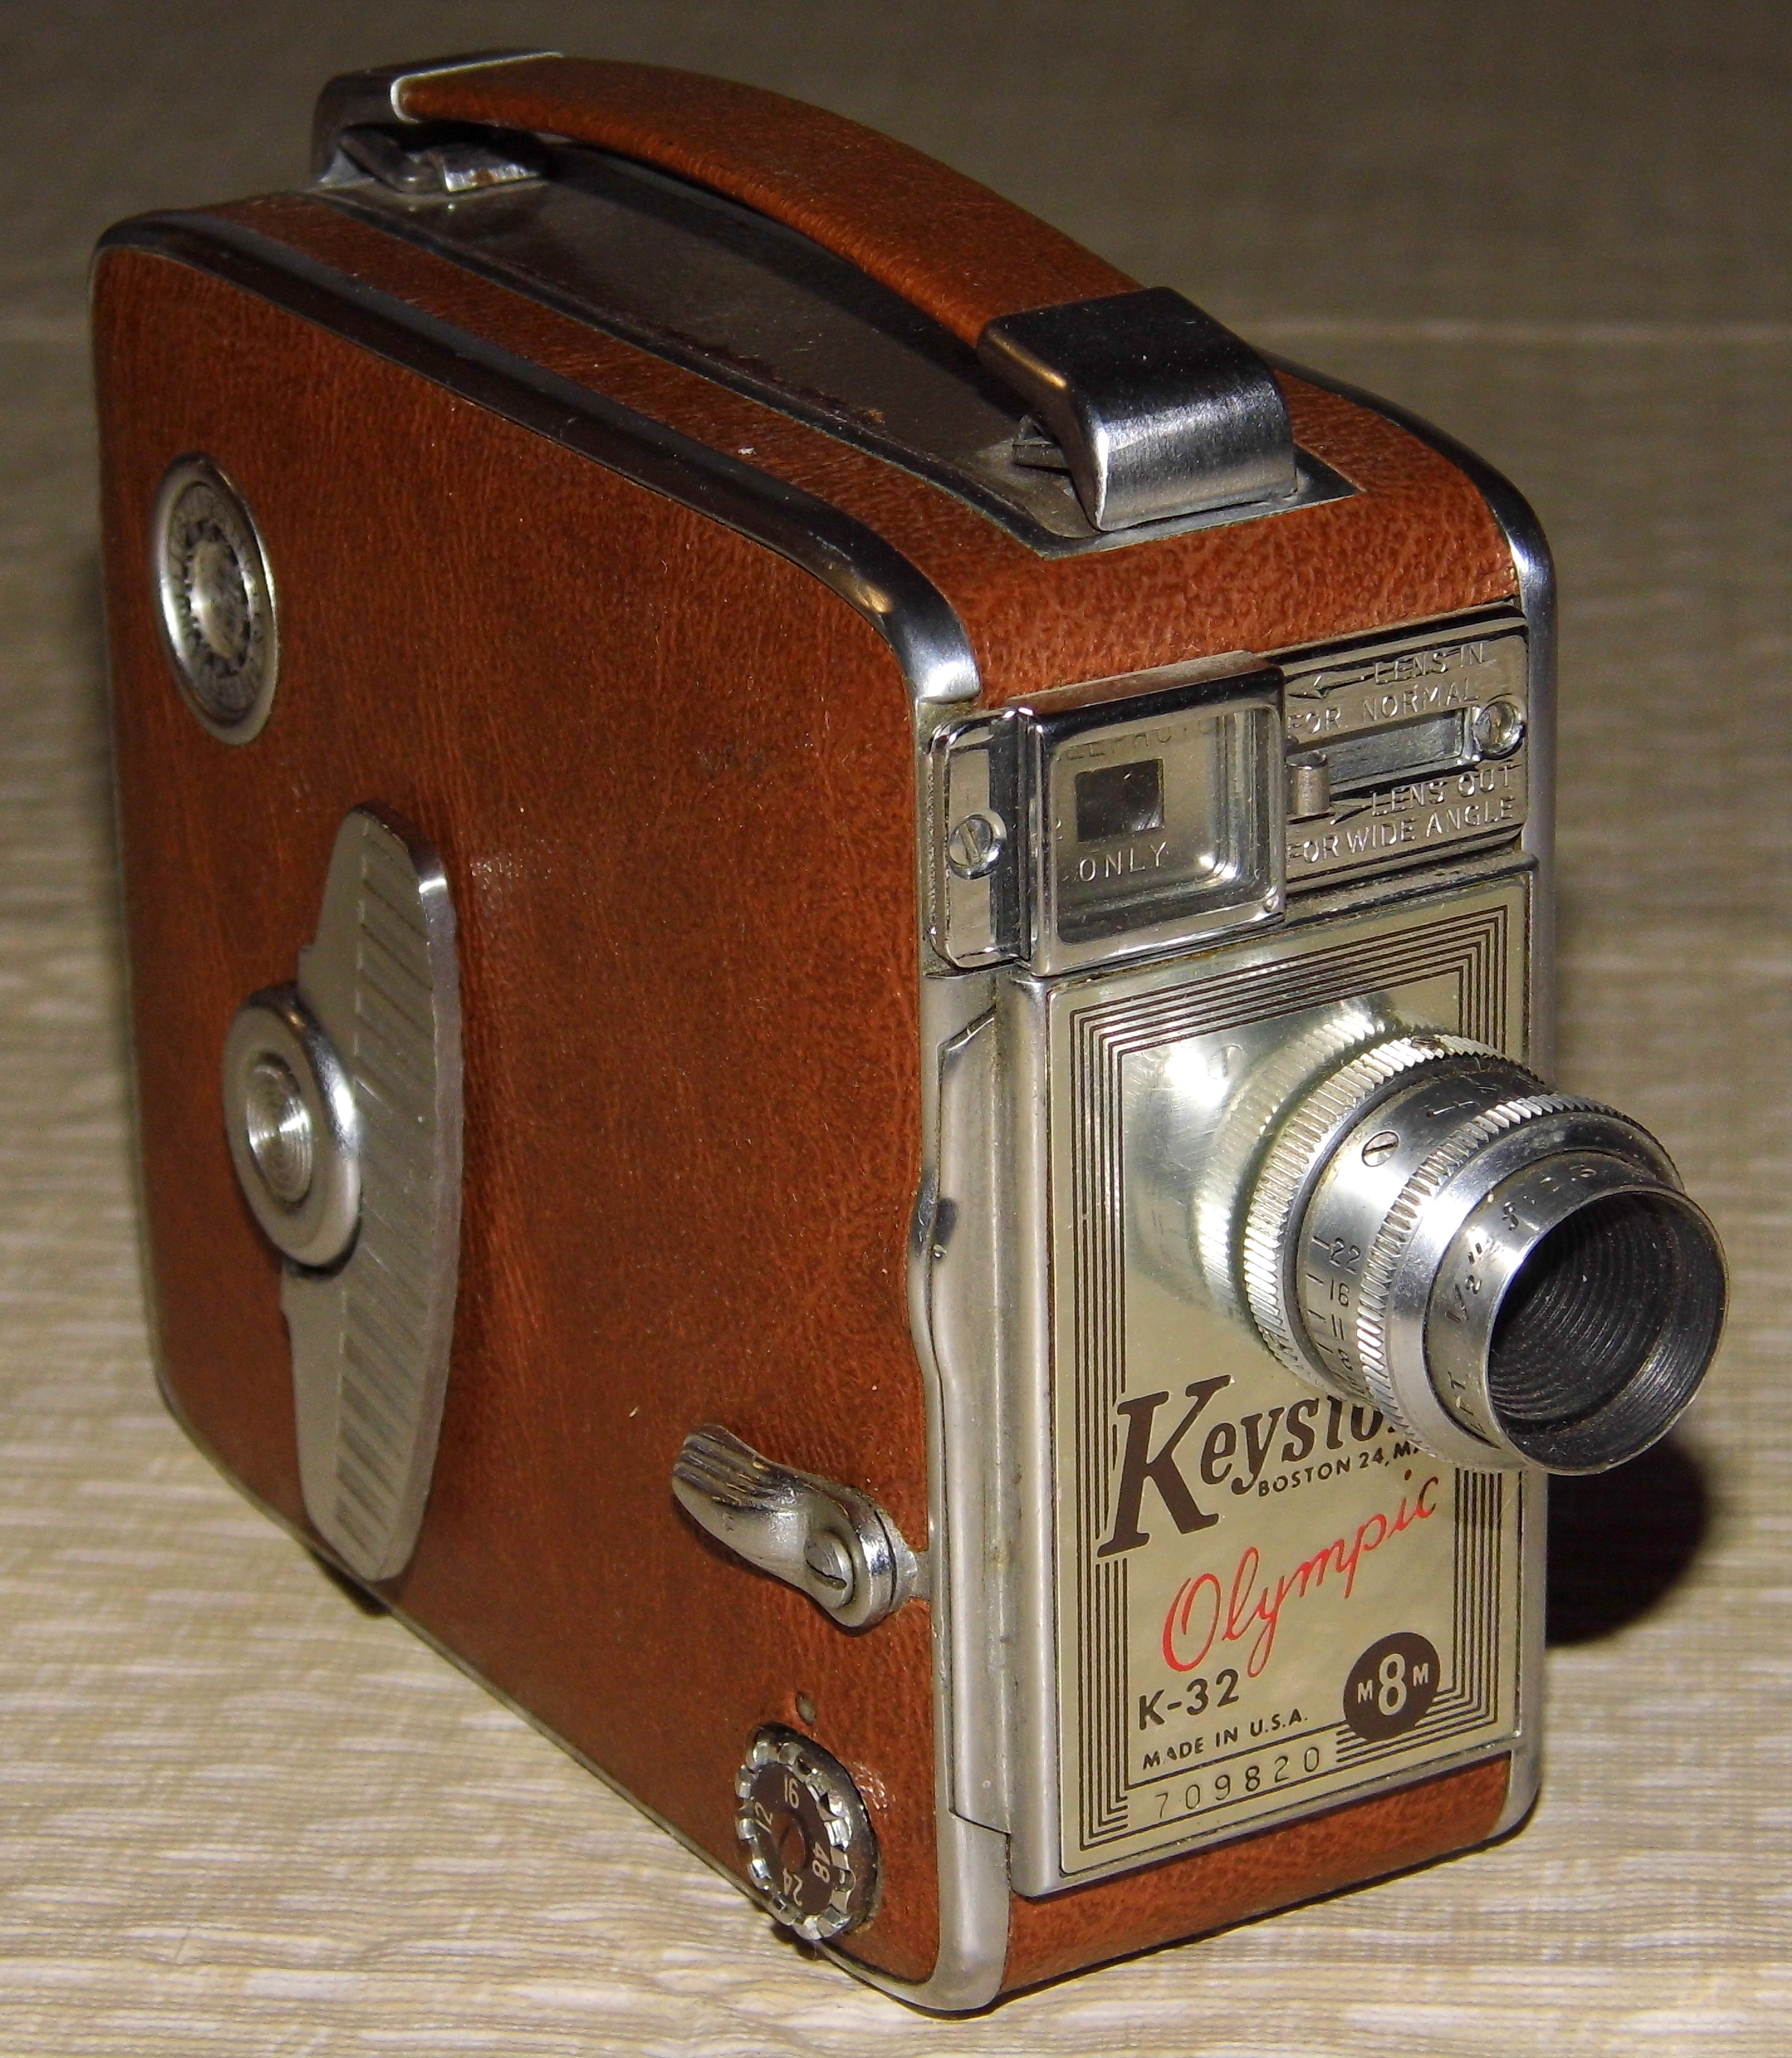 Vintage Keystone 8mm Movie Camera, Model K-32 Olympic, Light & Compact, Made In USA, Circa 1950 (13294999393)